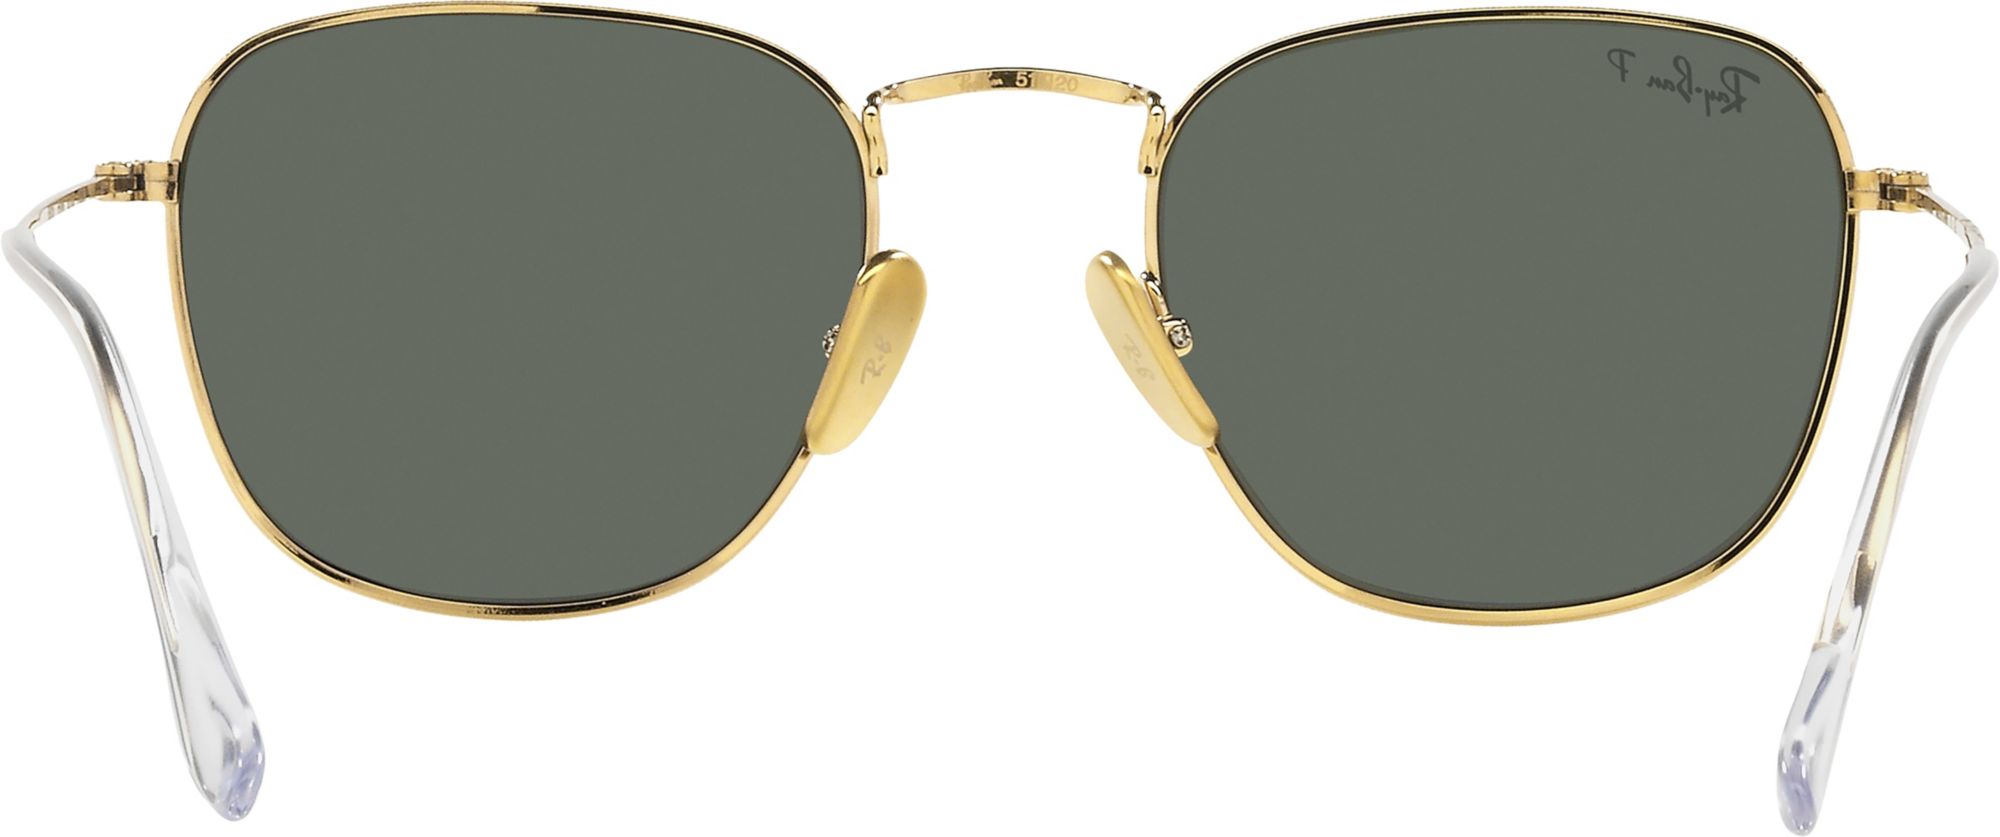 Ray-Ban Frank Titanium Sunglasses